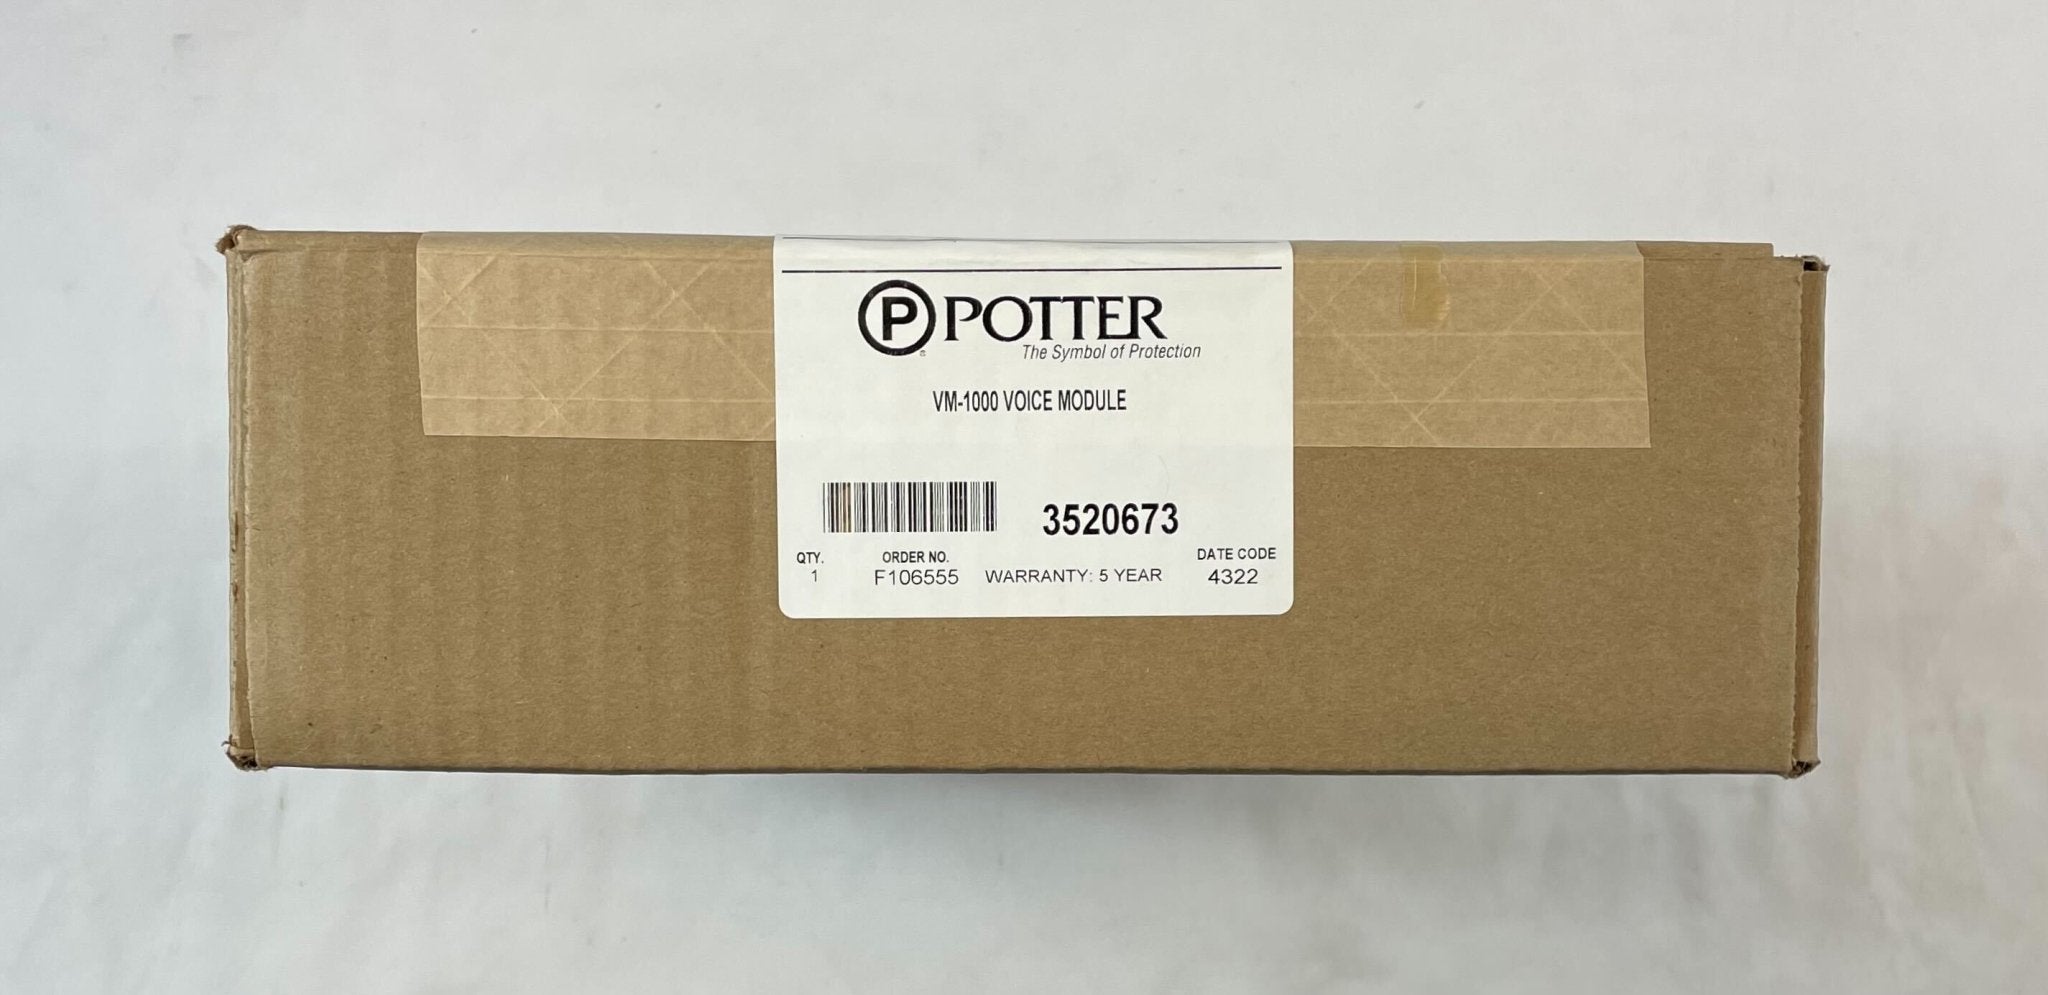 Potter VM-1000 - The Fire Alarm Supplier